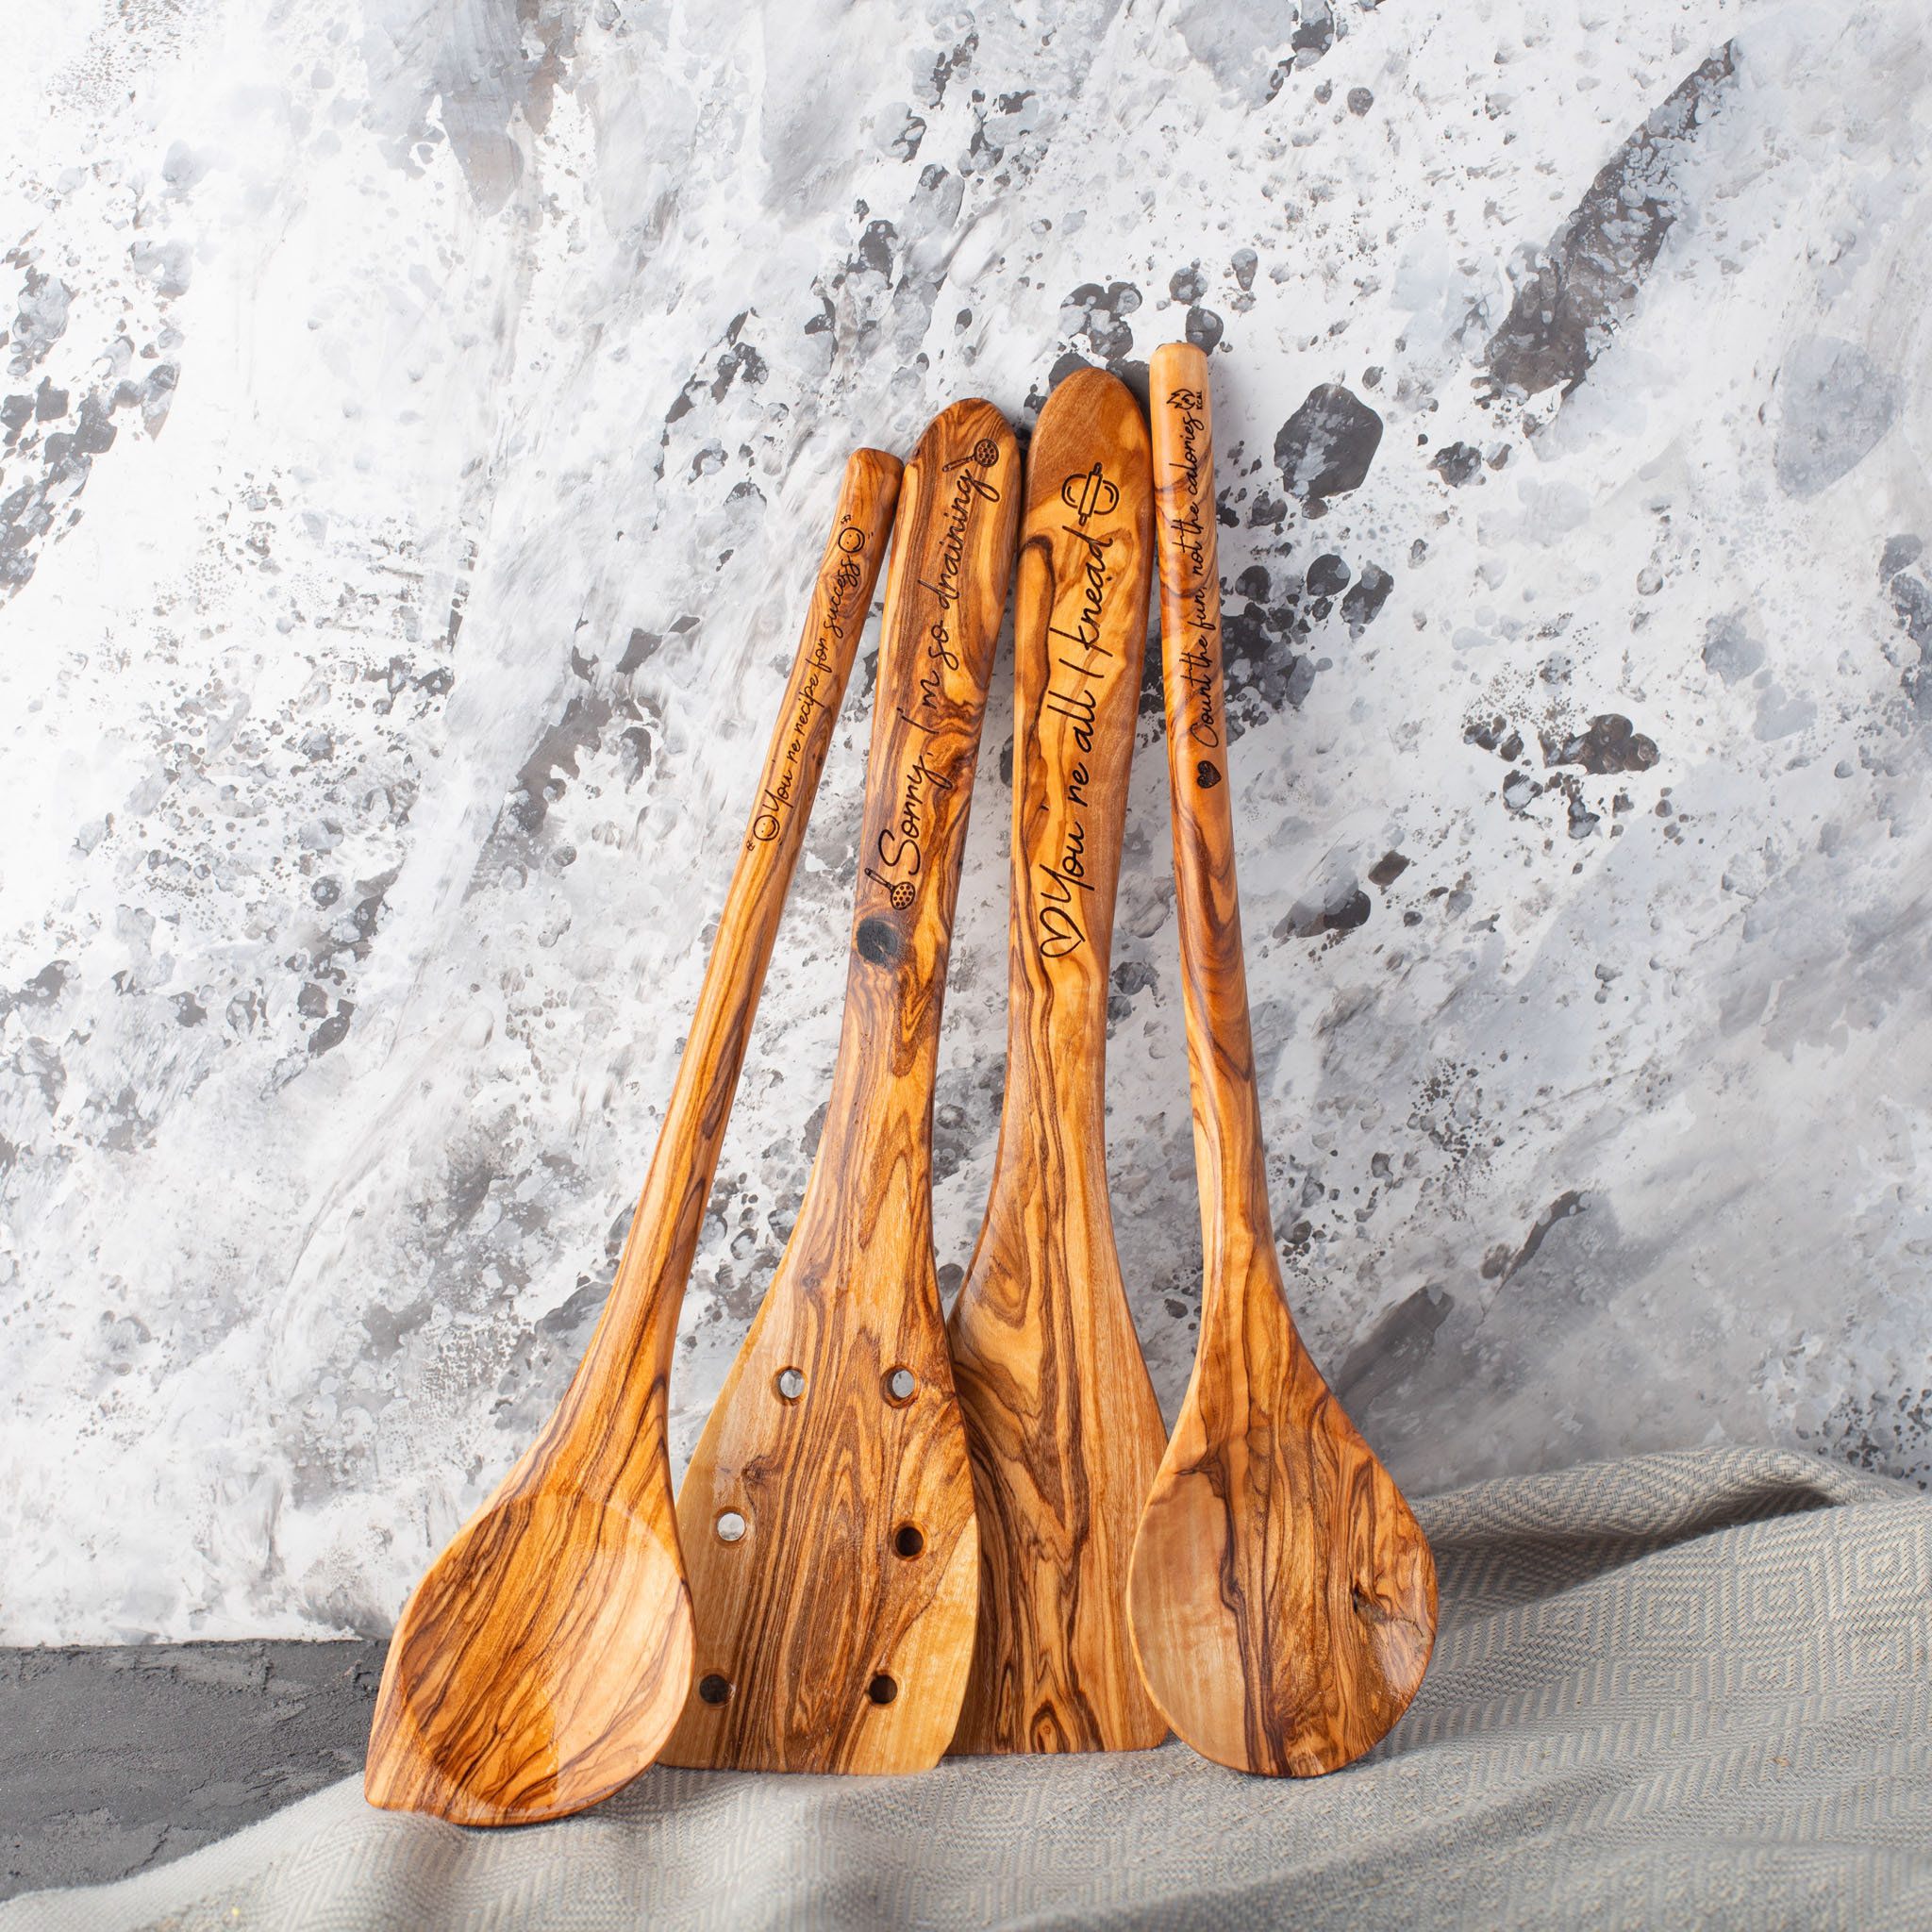 Olive Wood Kitchen Utensils Set for Cooking (4-Piece Set) - Forest Decor